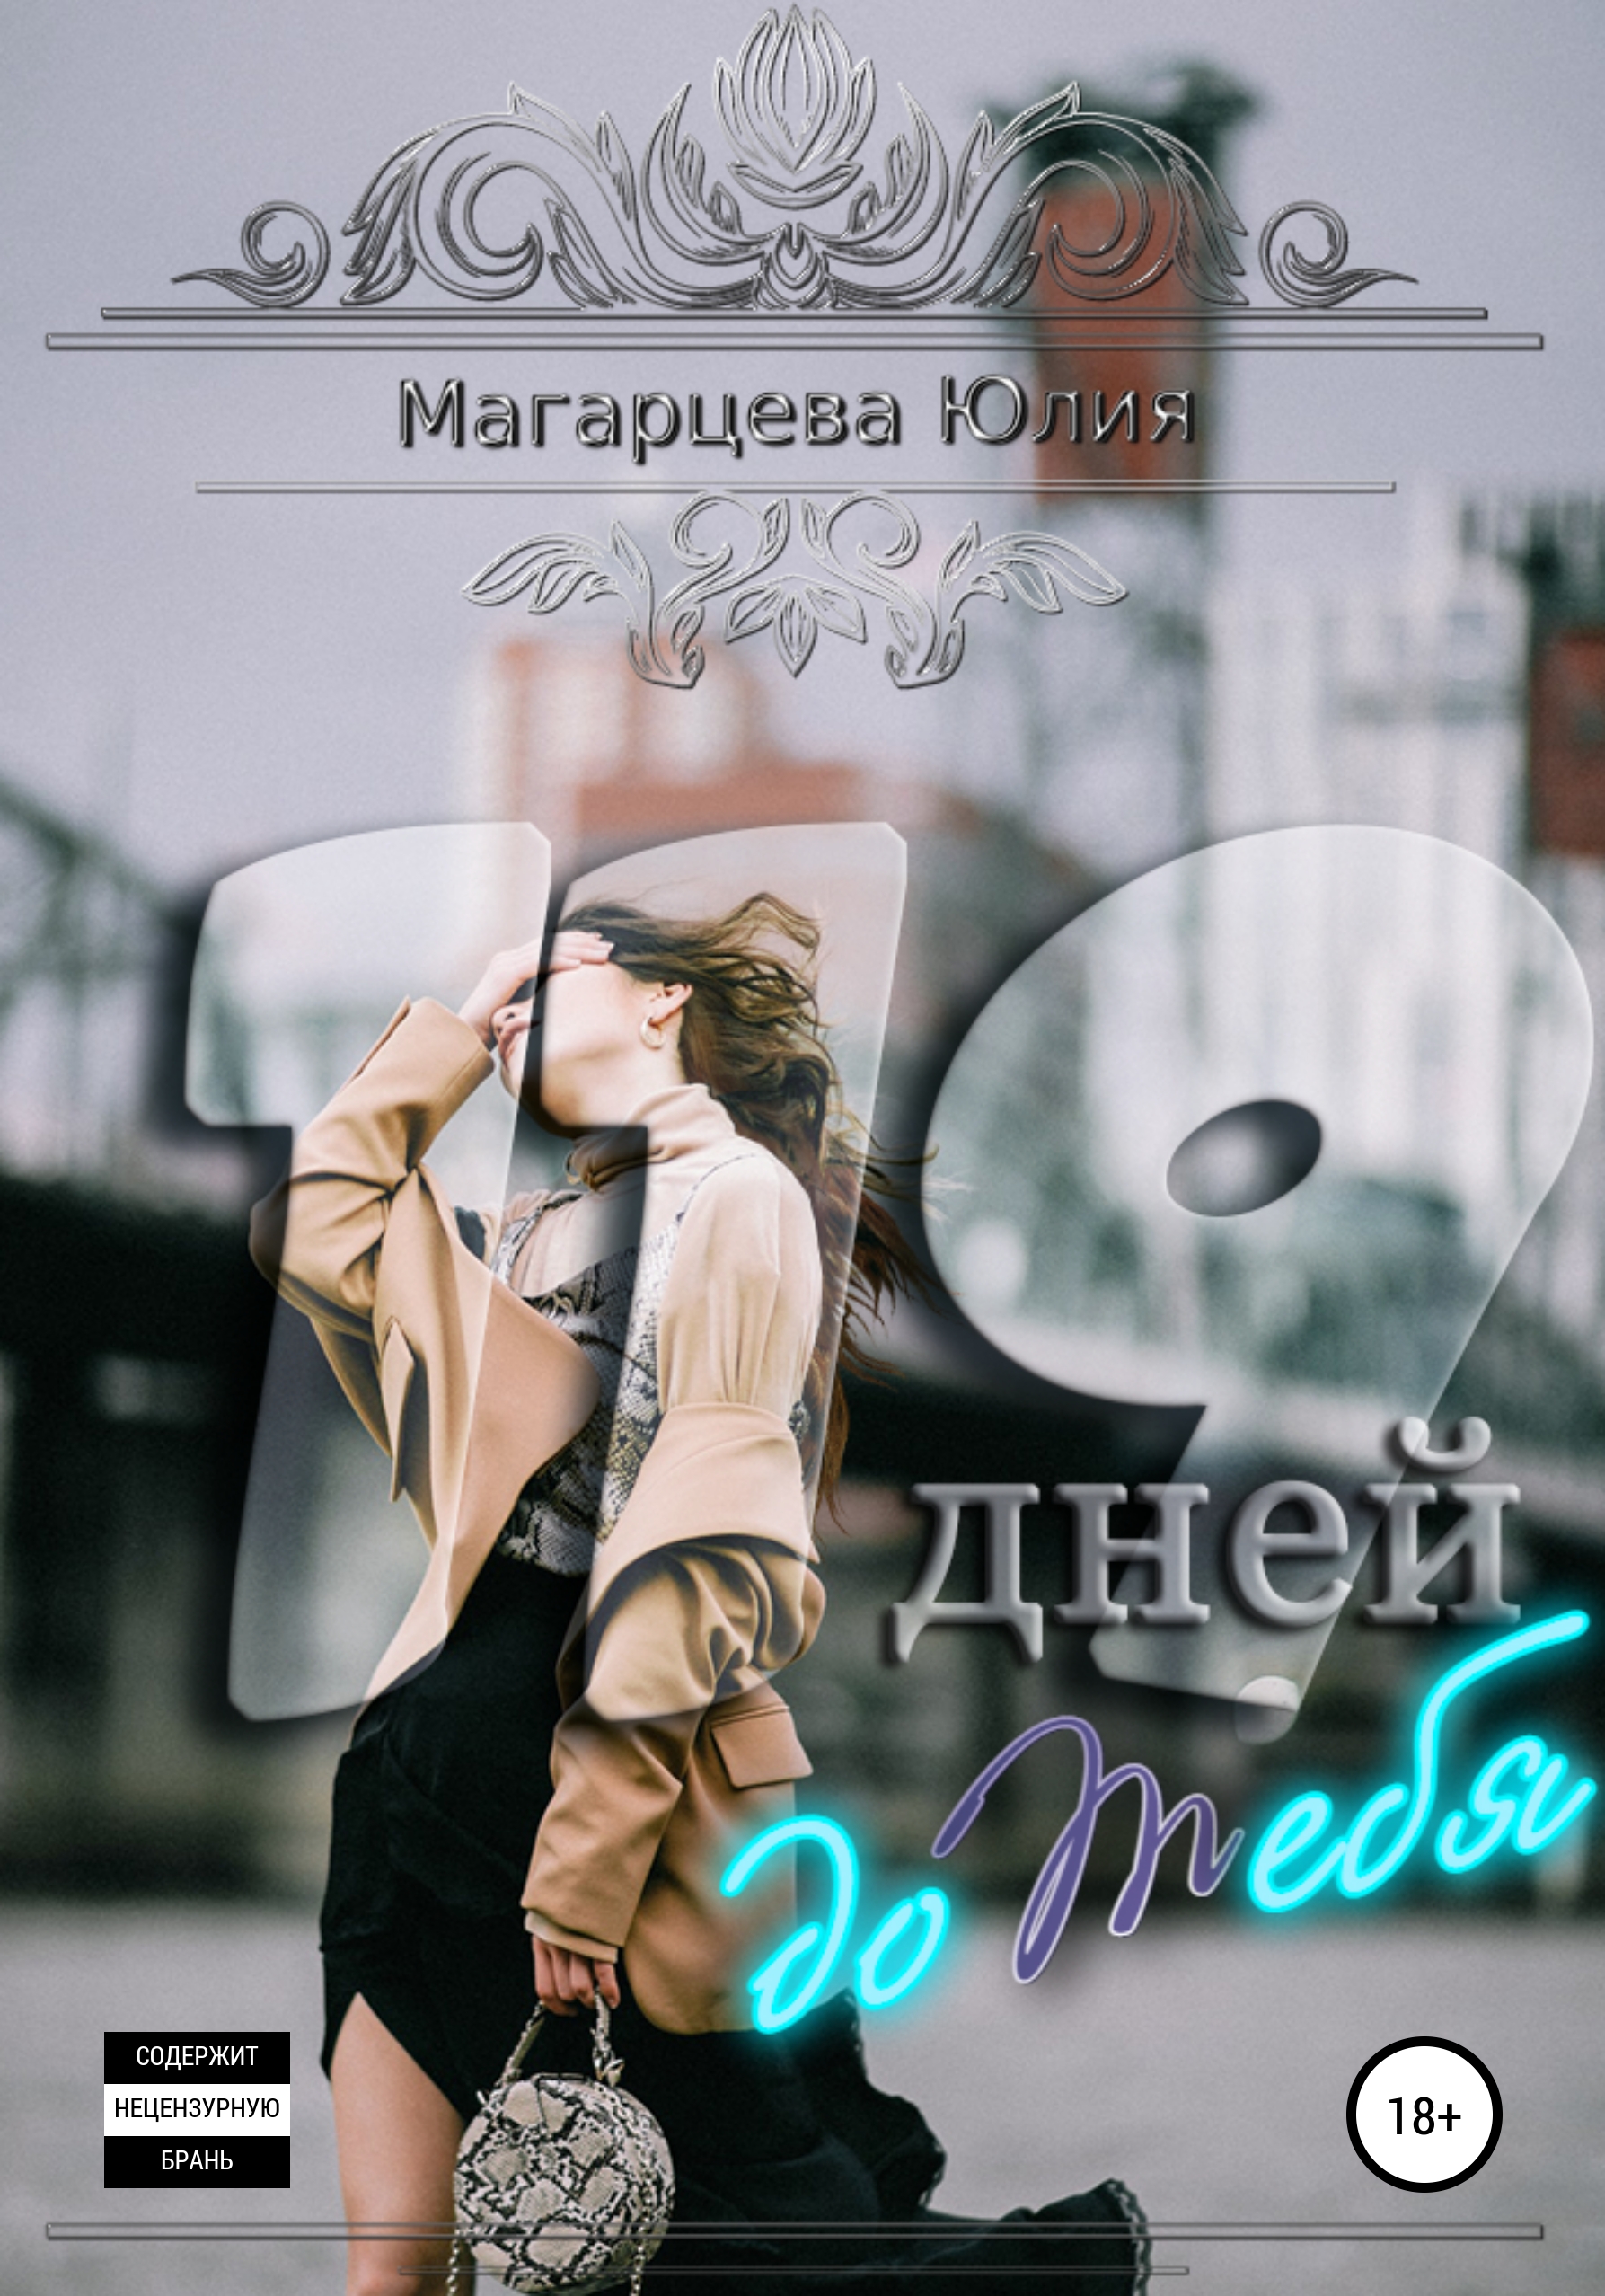 119 дней до тебя – Юлия Магарцева